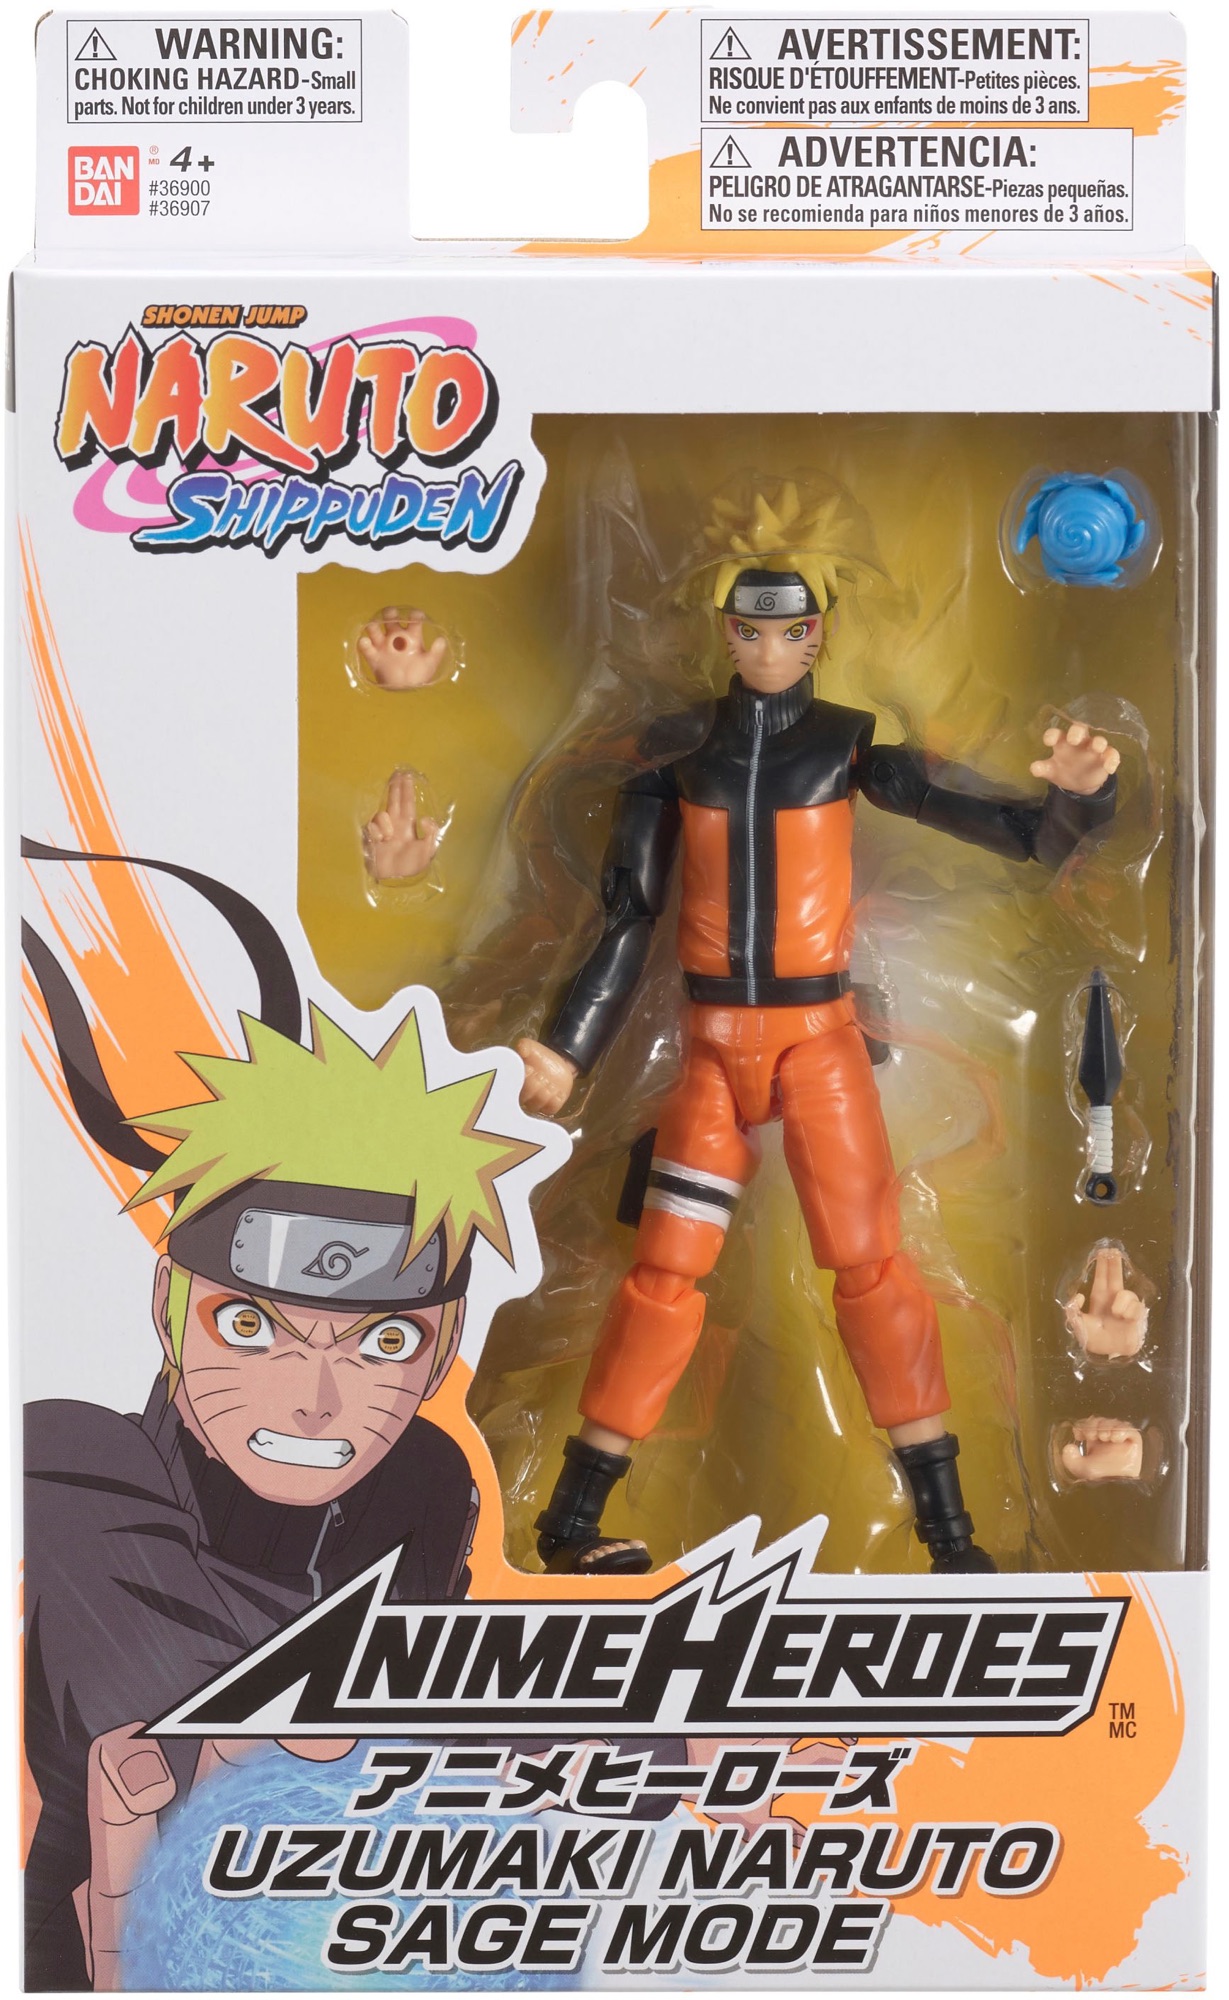 Bandai Anime Heroes Naruto Shippuden Figure Review | Itachi, Minato, &  Sasuke Vs Itachi SDCC 2 Pack. - YouTube